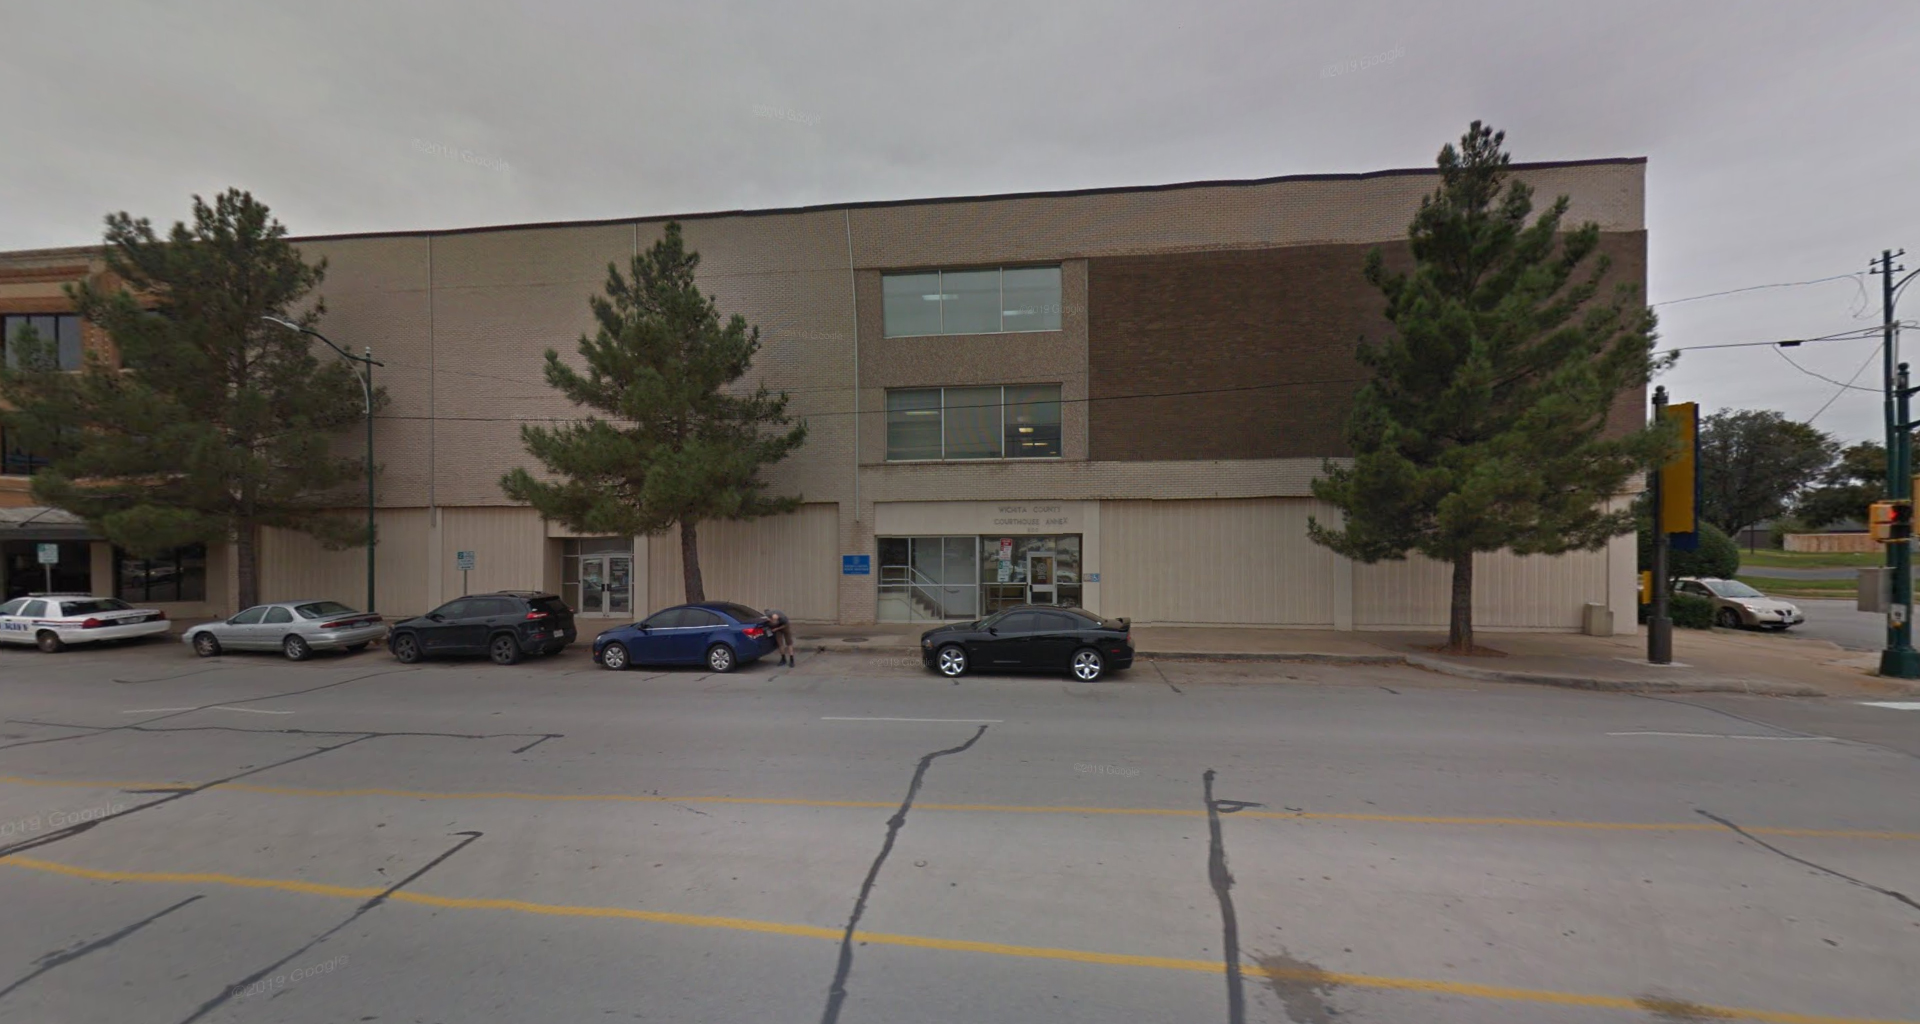 Wichita County Health Department in Wichita, Kansas | Vital Records Office  for Birth, Death & Marriage